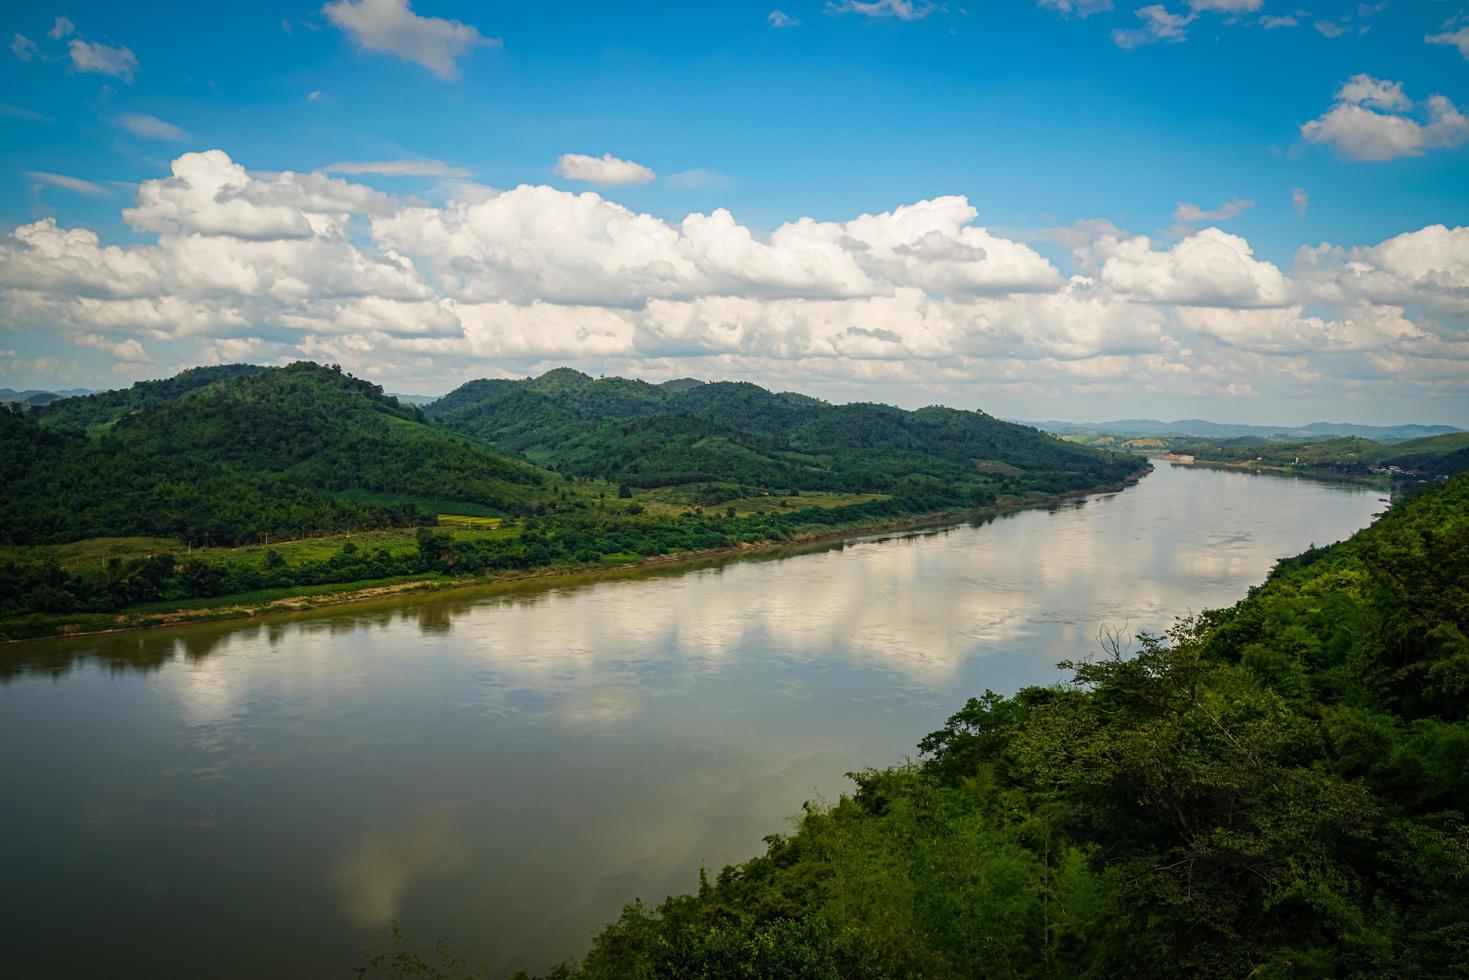 Berge und Himmel in der ruhigen Landschaft am Ufer des Mekong foto